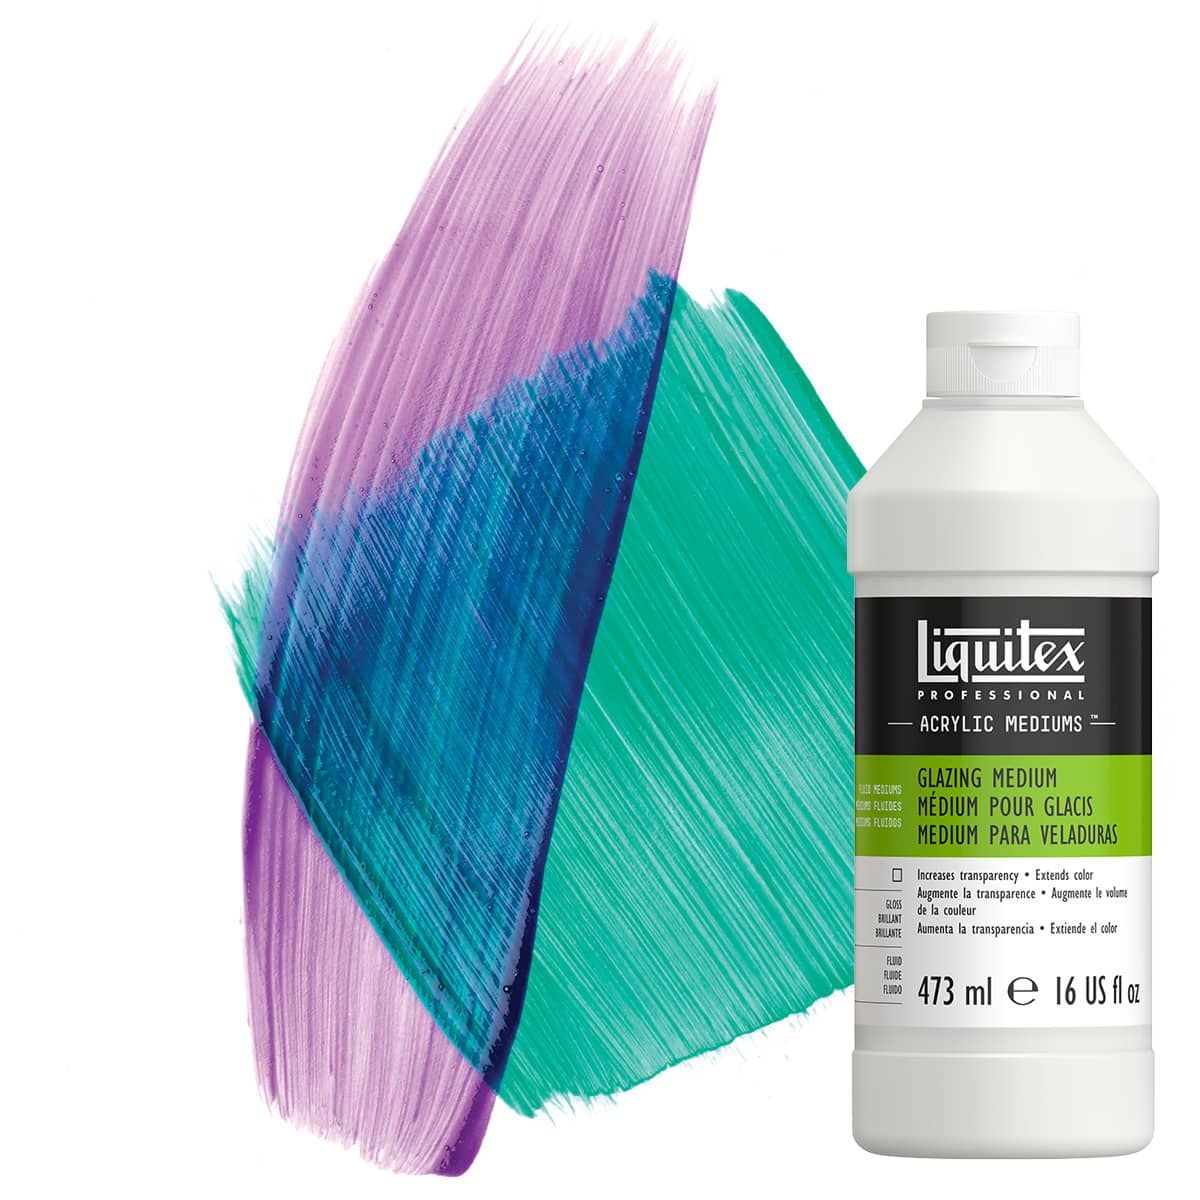 Professional 16oz Airbrush Thinner - Reduces Acrylic Paint - Enhances Flow